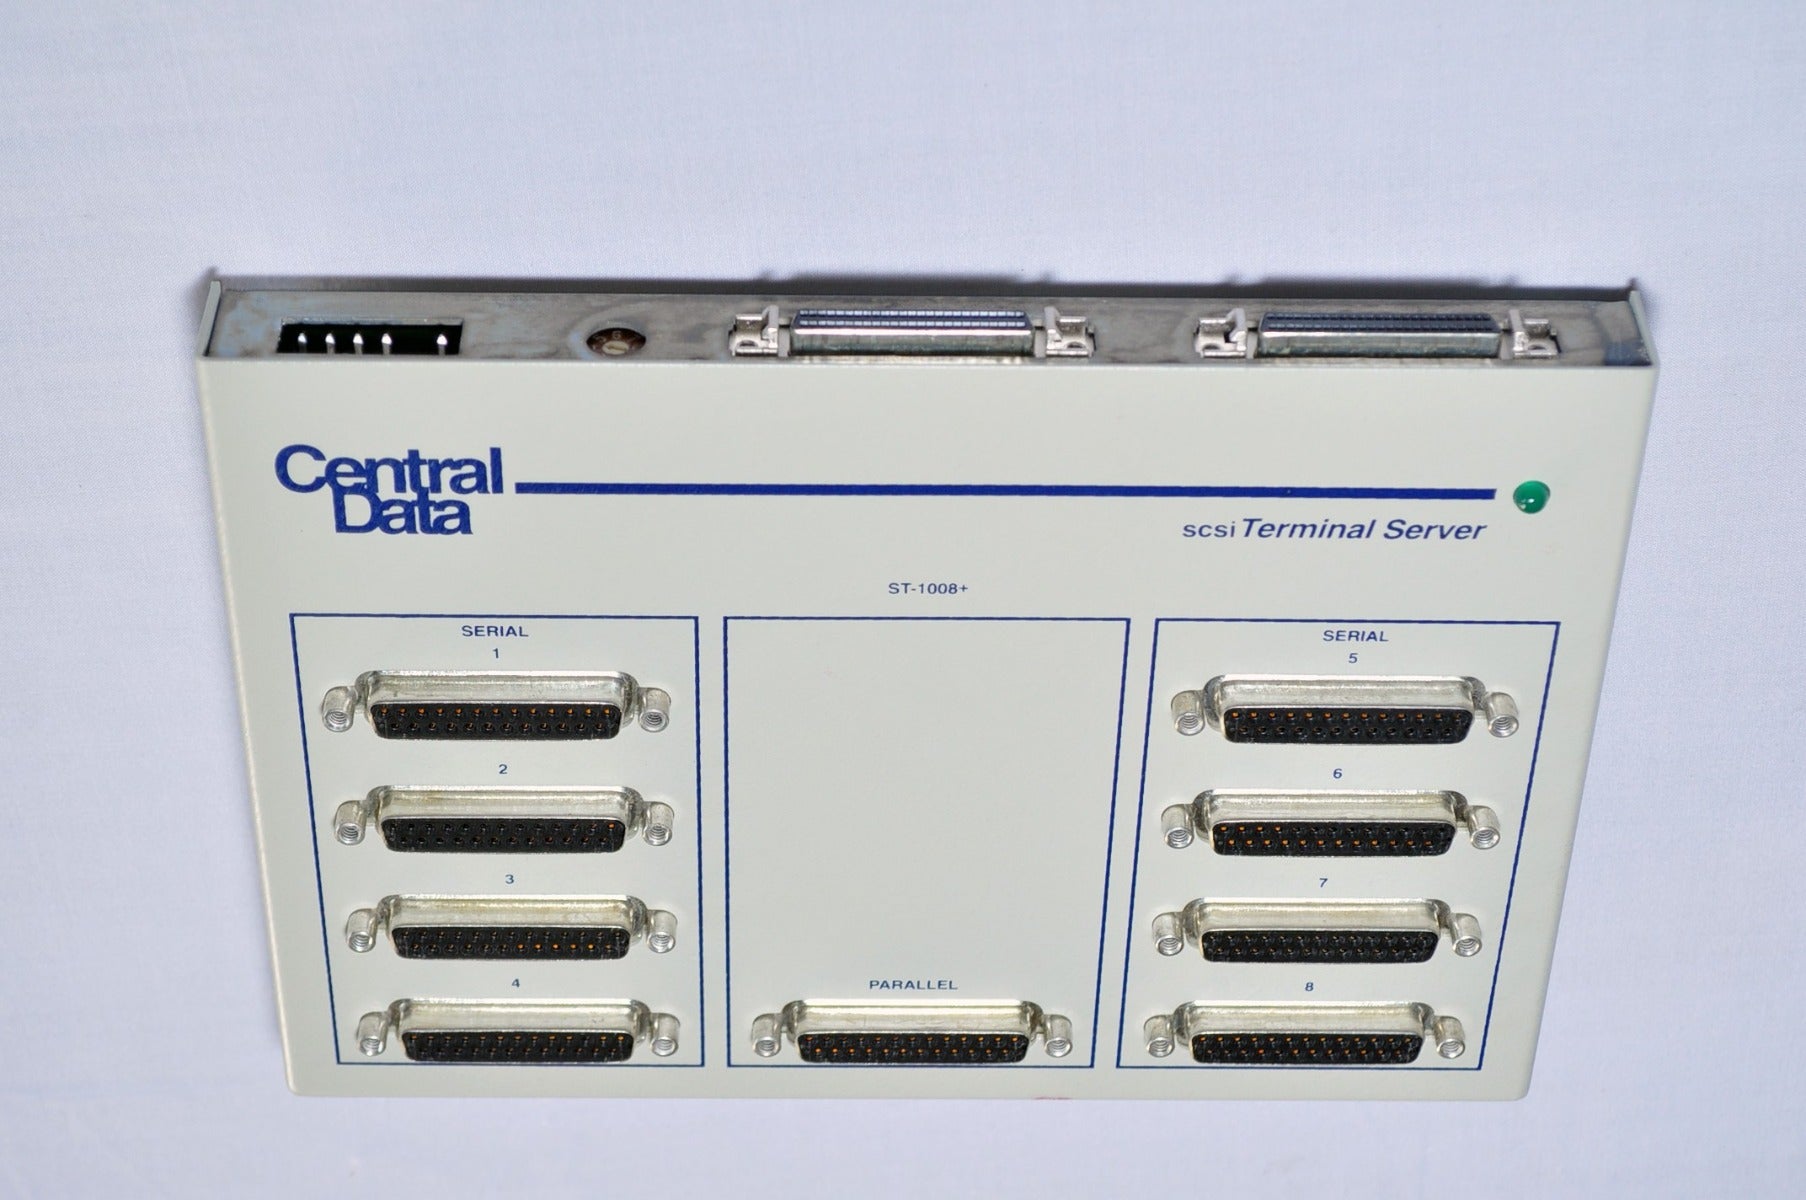 Central data st-1008+ scsi terminal server